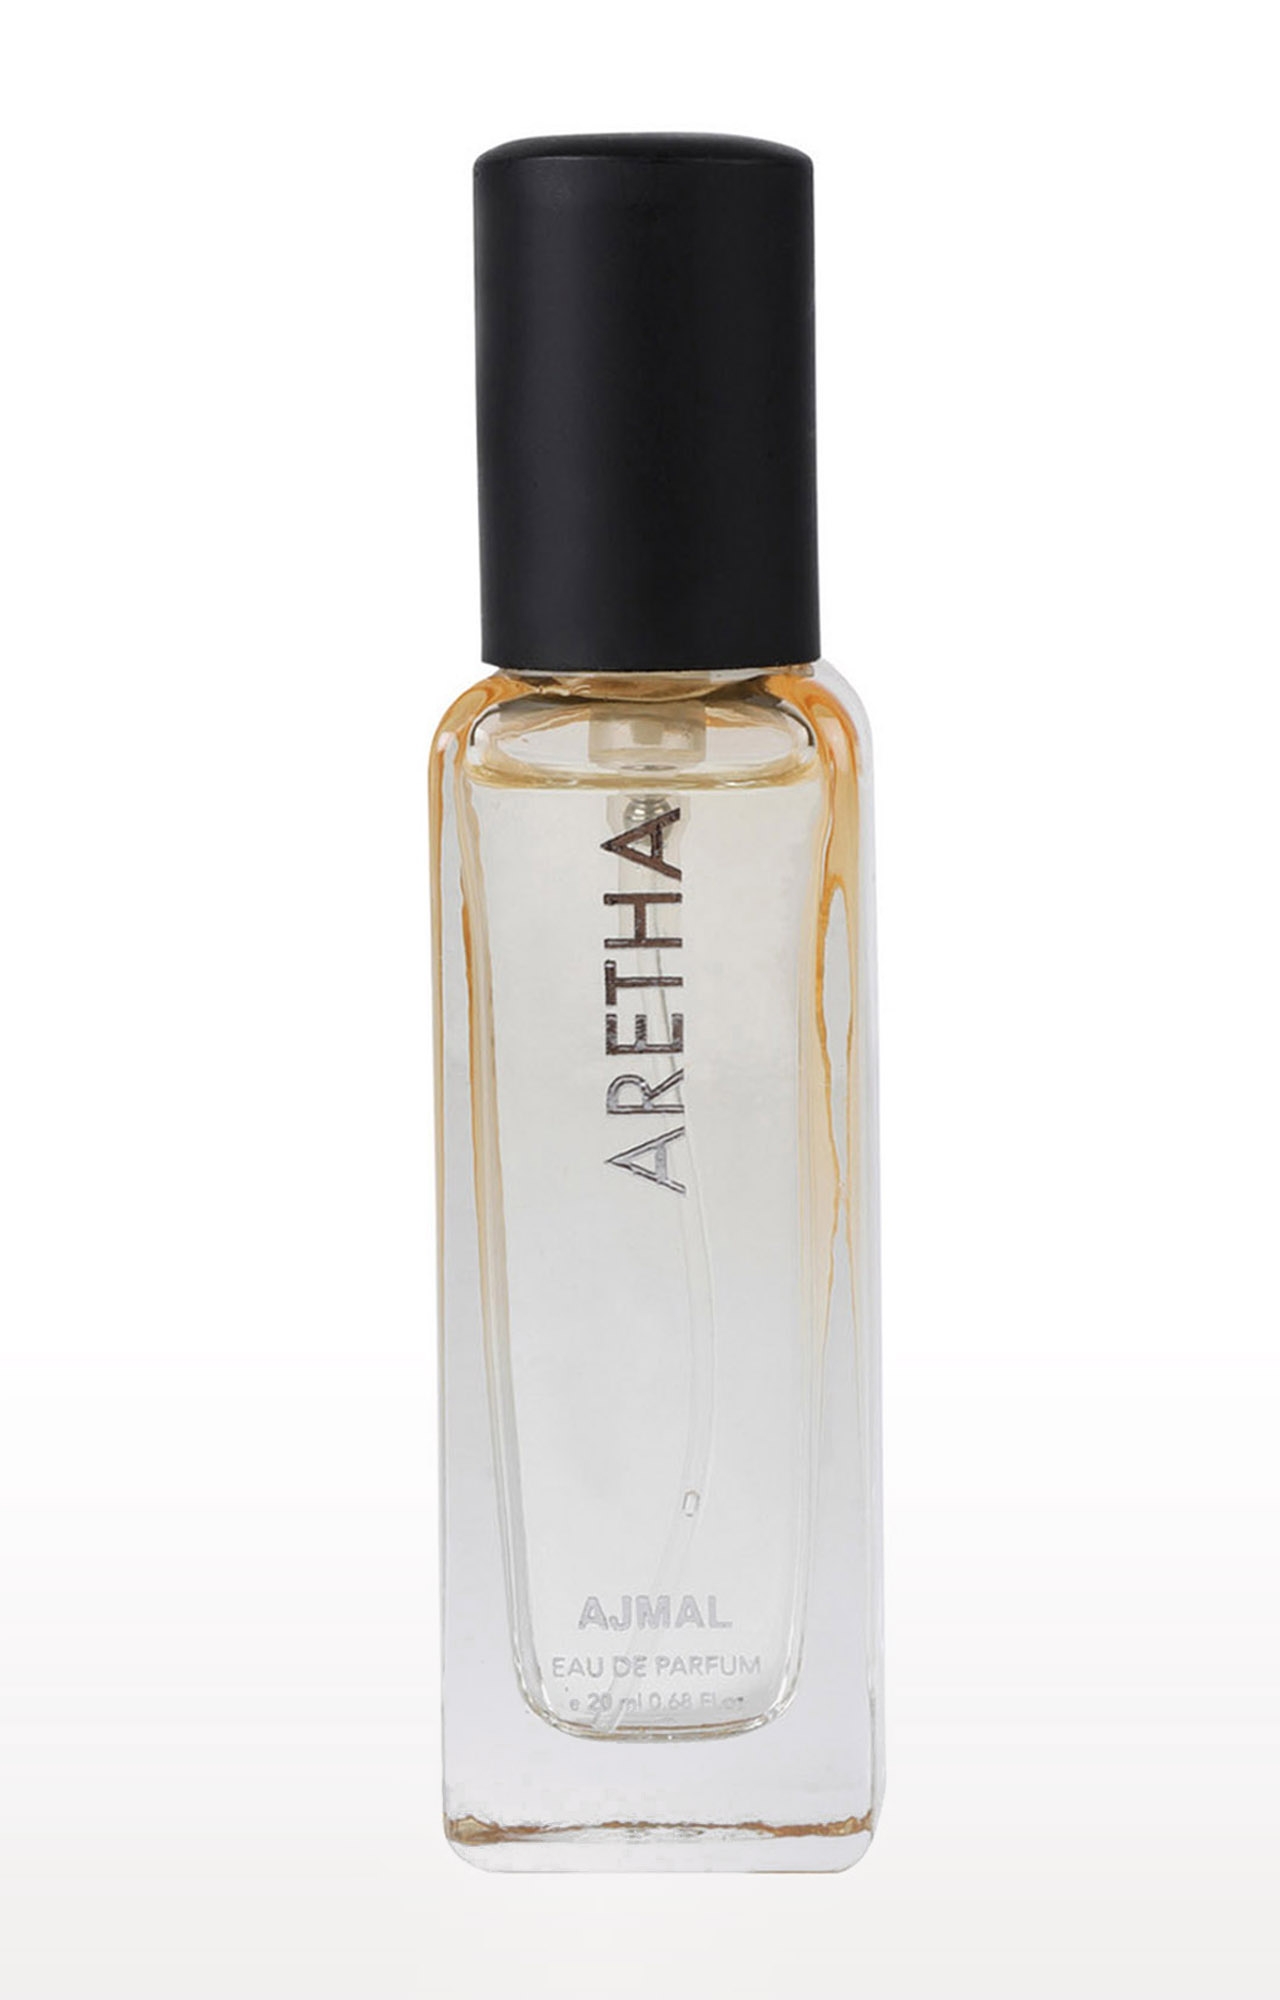 Ajmal Aretha Eau De Parfum Fruity Perfume 20ML Long Lasting Scent Spray Party Wear Gift For Women